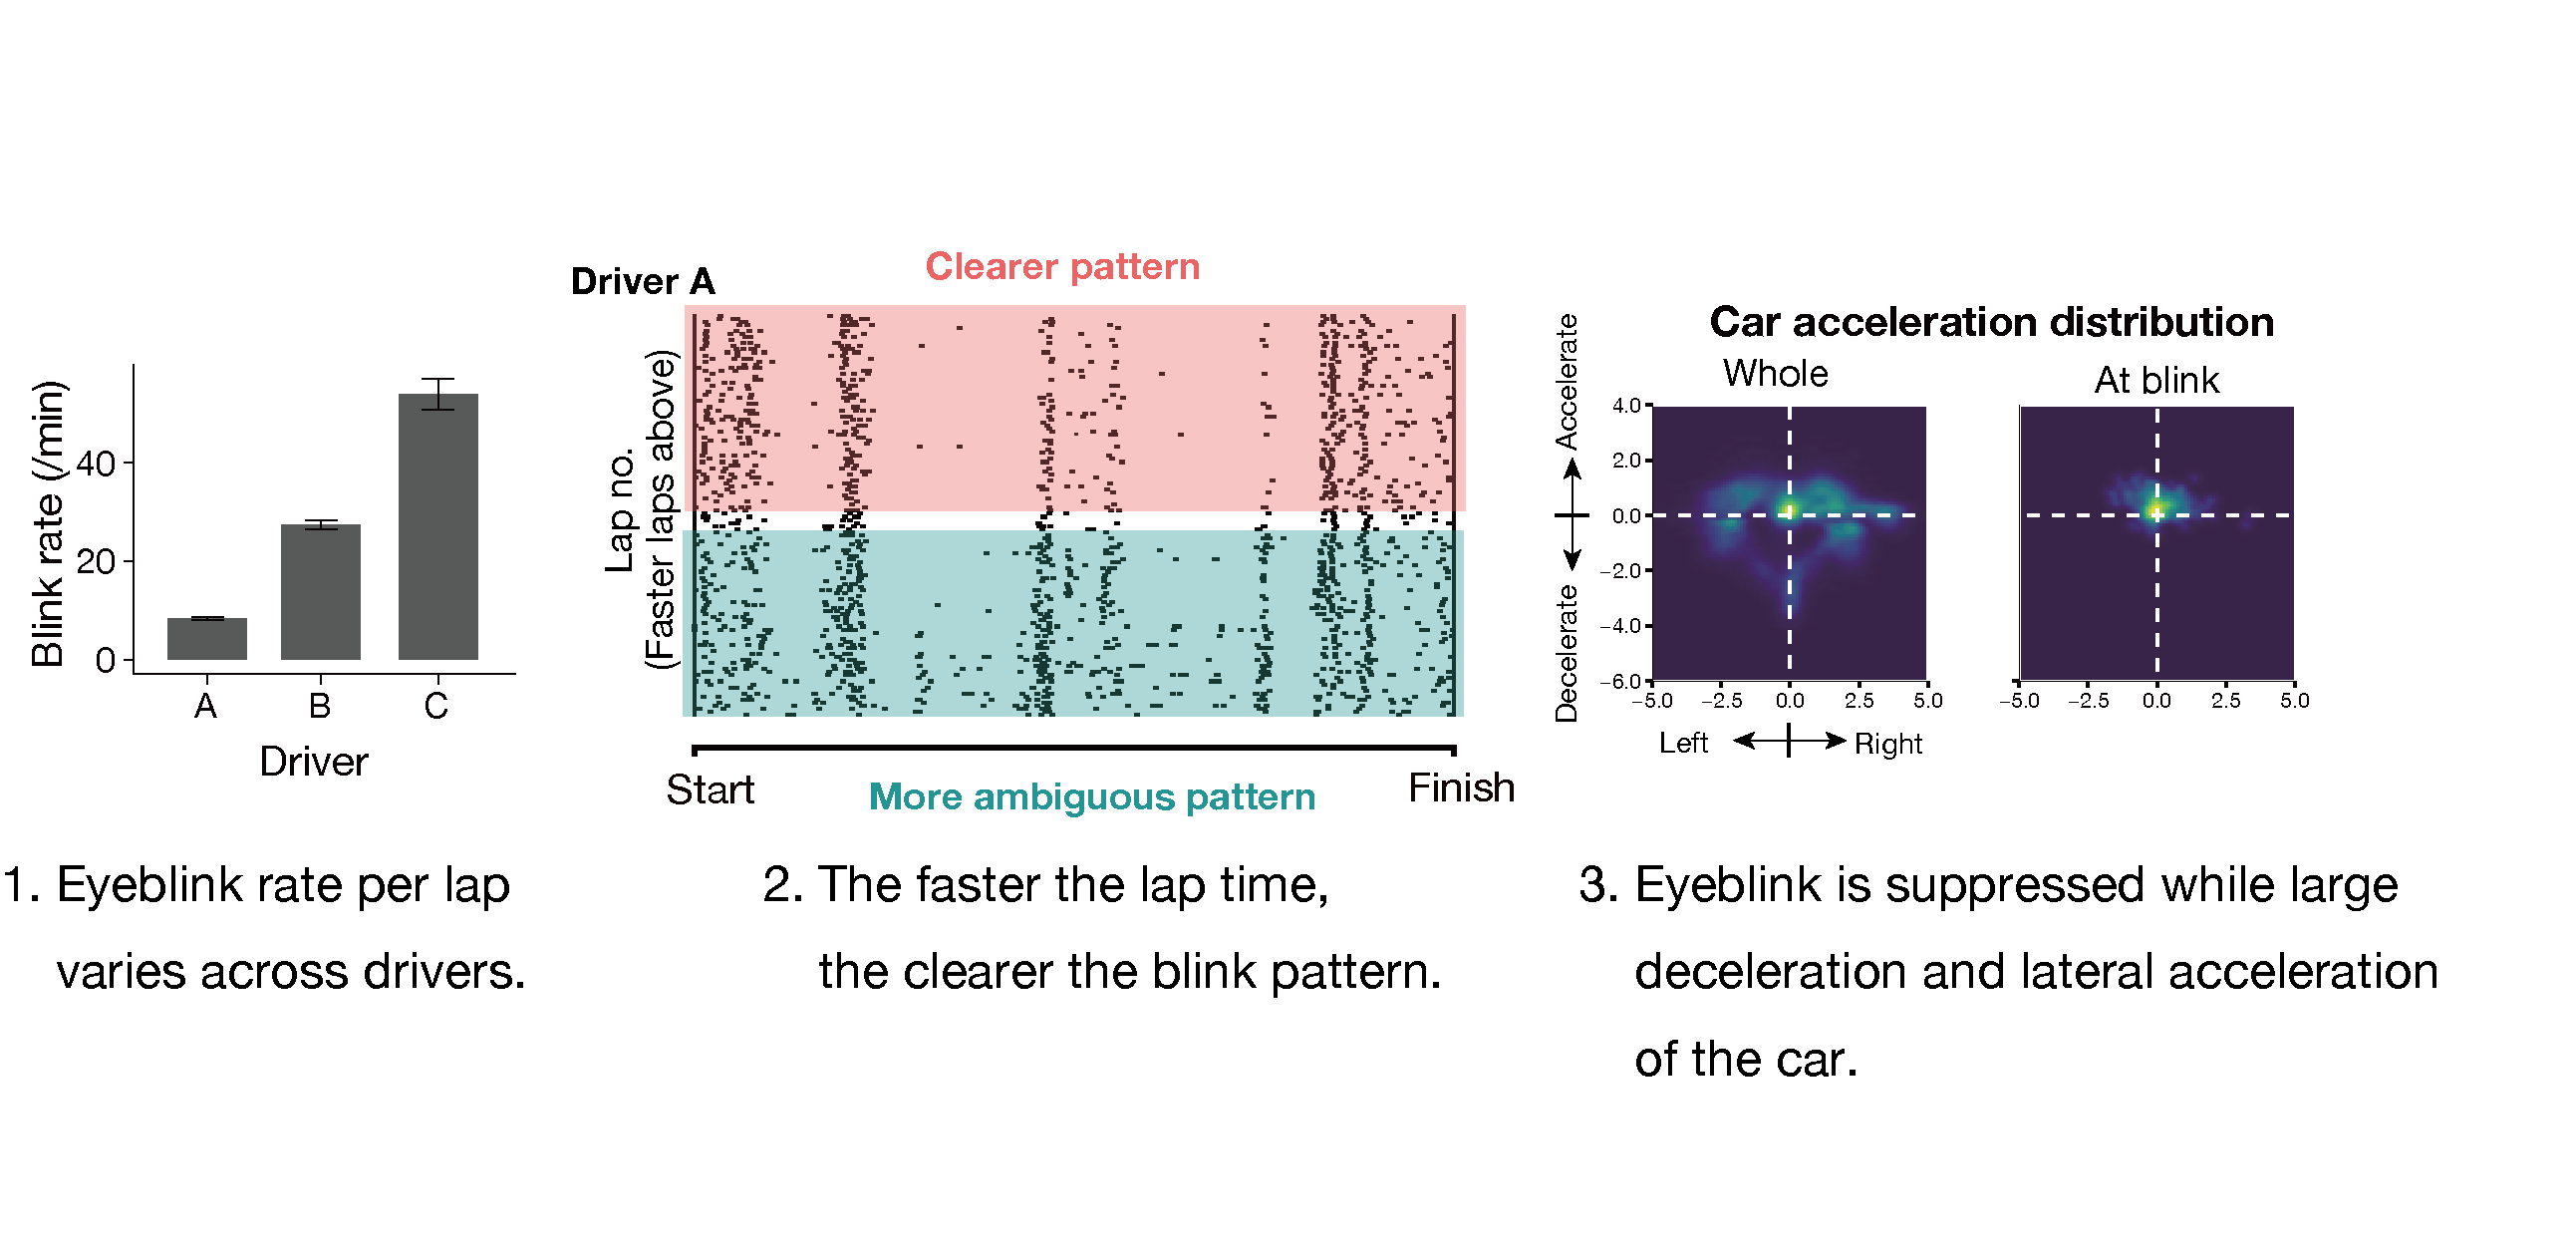 Figure 2. Three factors determine eyeblink patterns while driving.